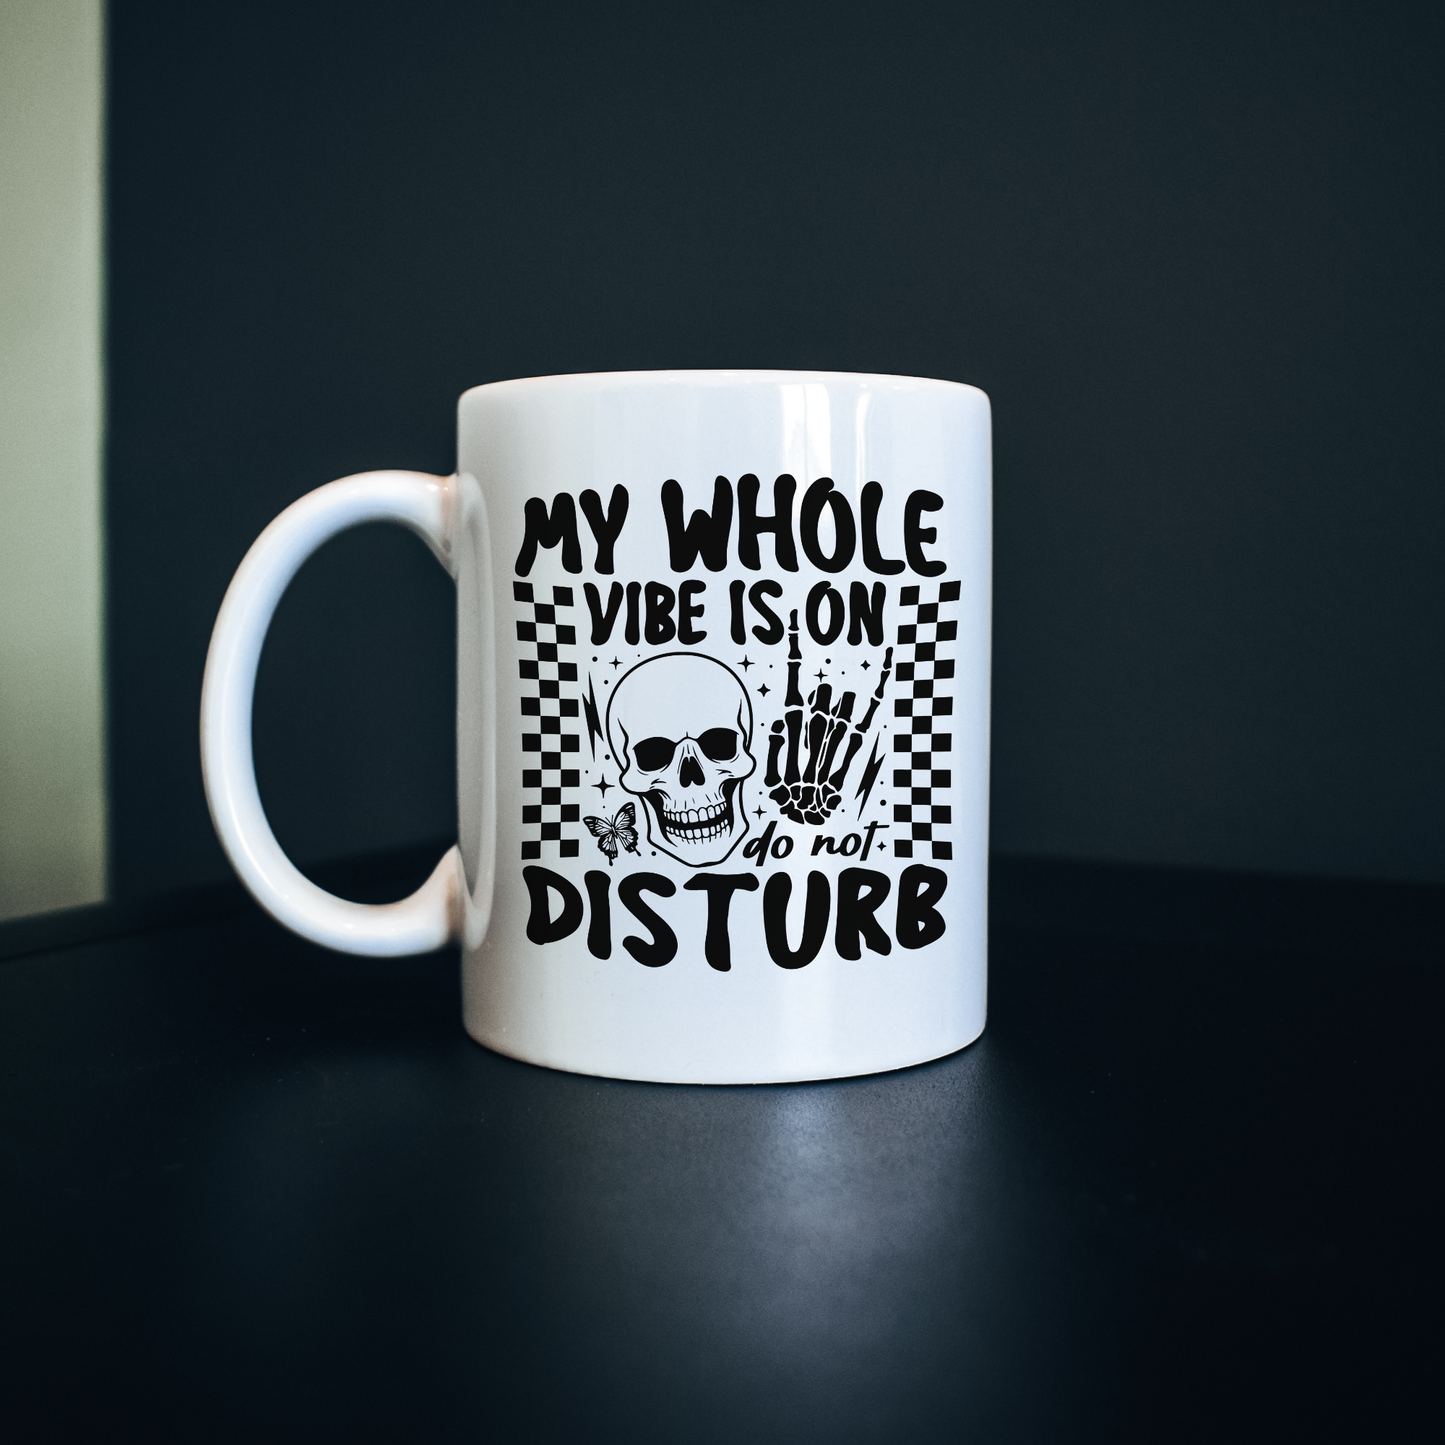 Do Not Disturb Coffee Mug